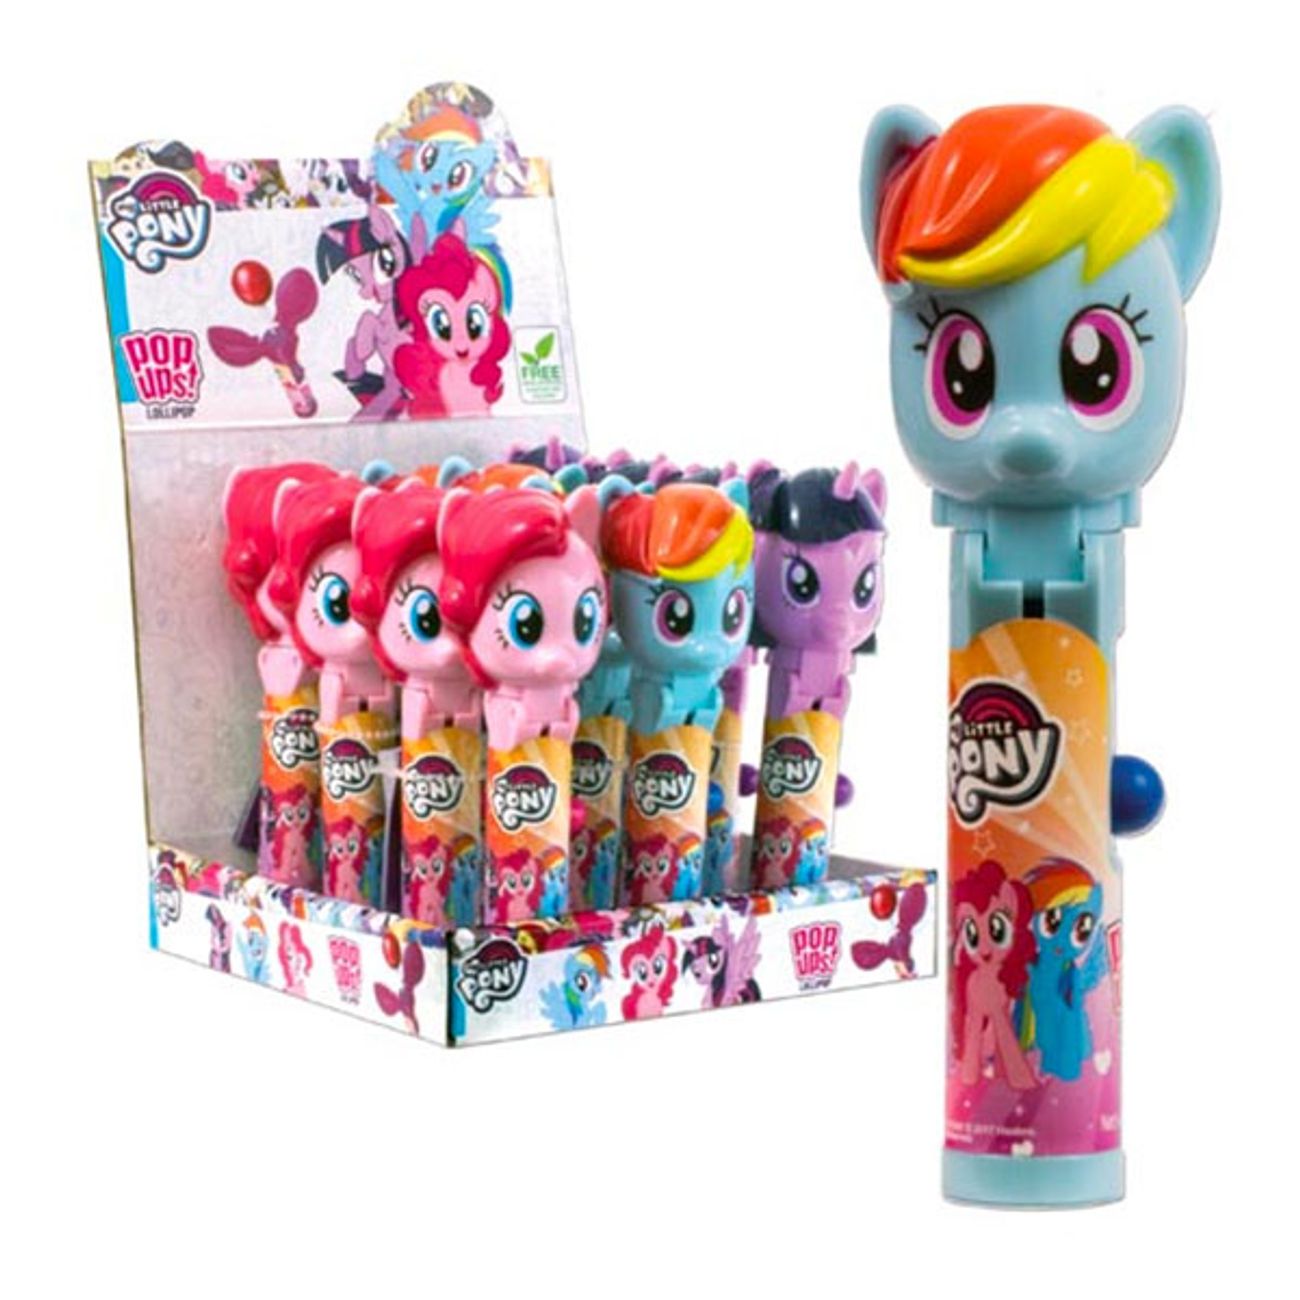 my-little-pony-pop-ups-lollipop-1